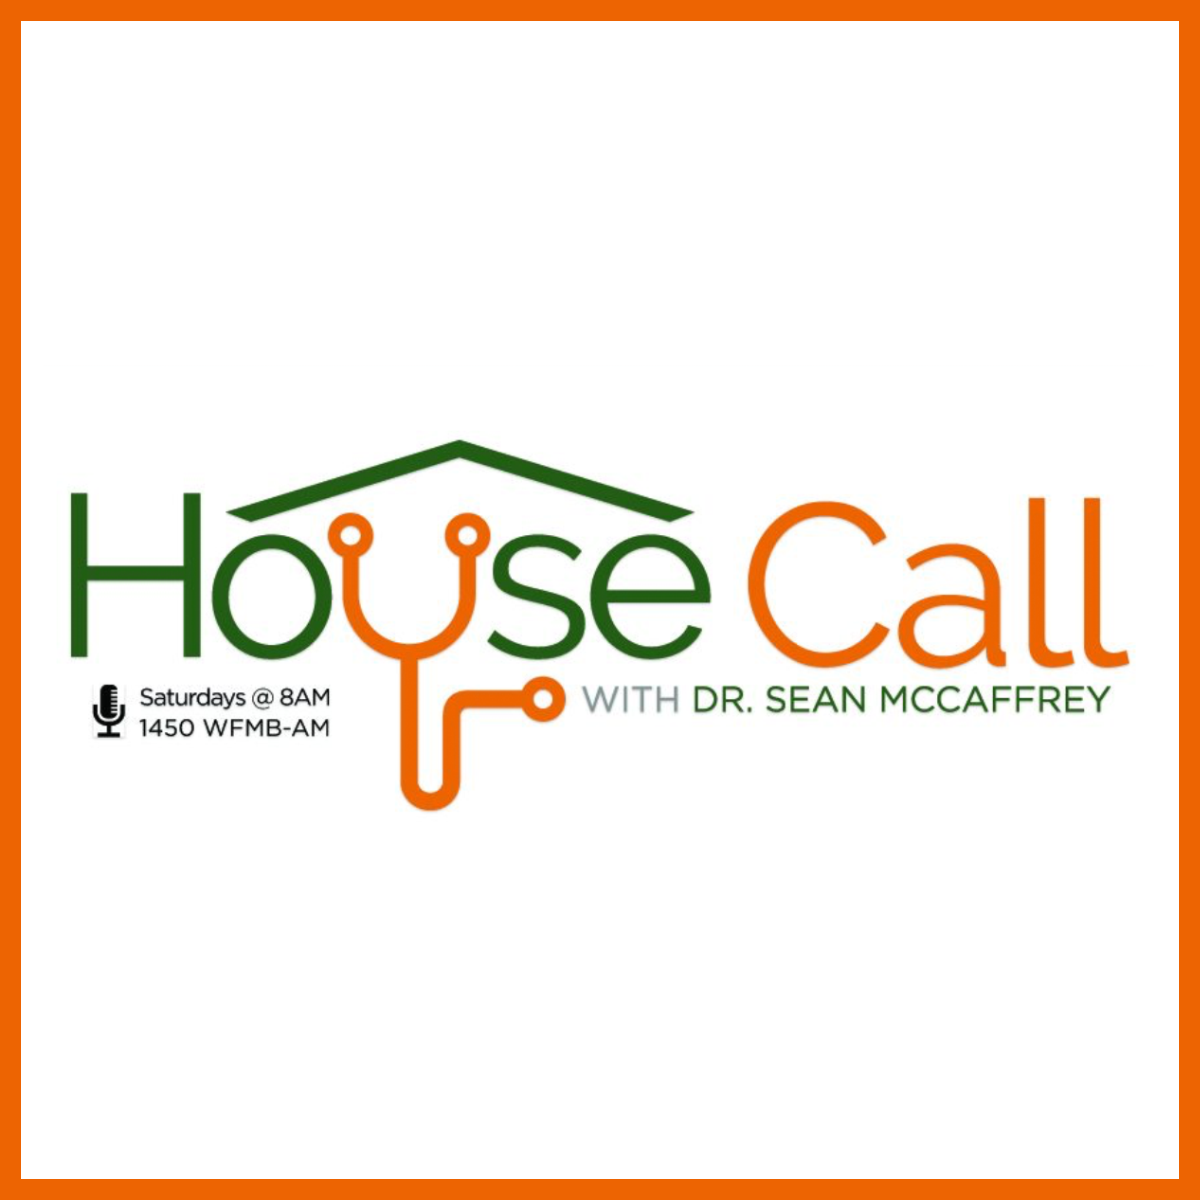 House Call with Dr. Sean McCaffrey